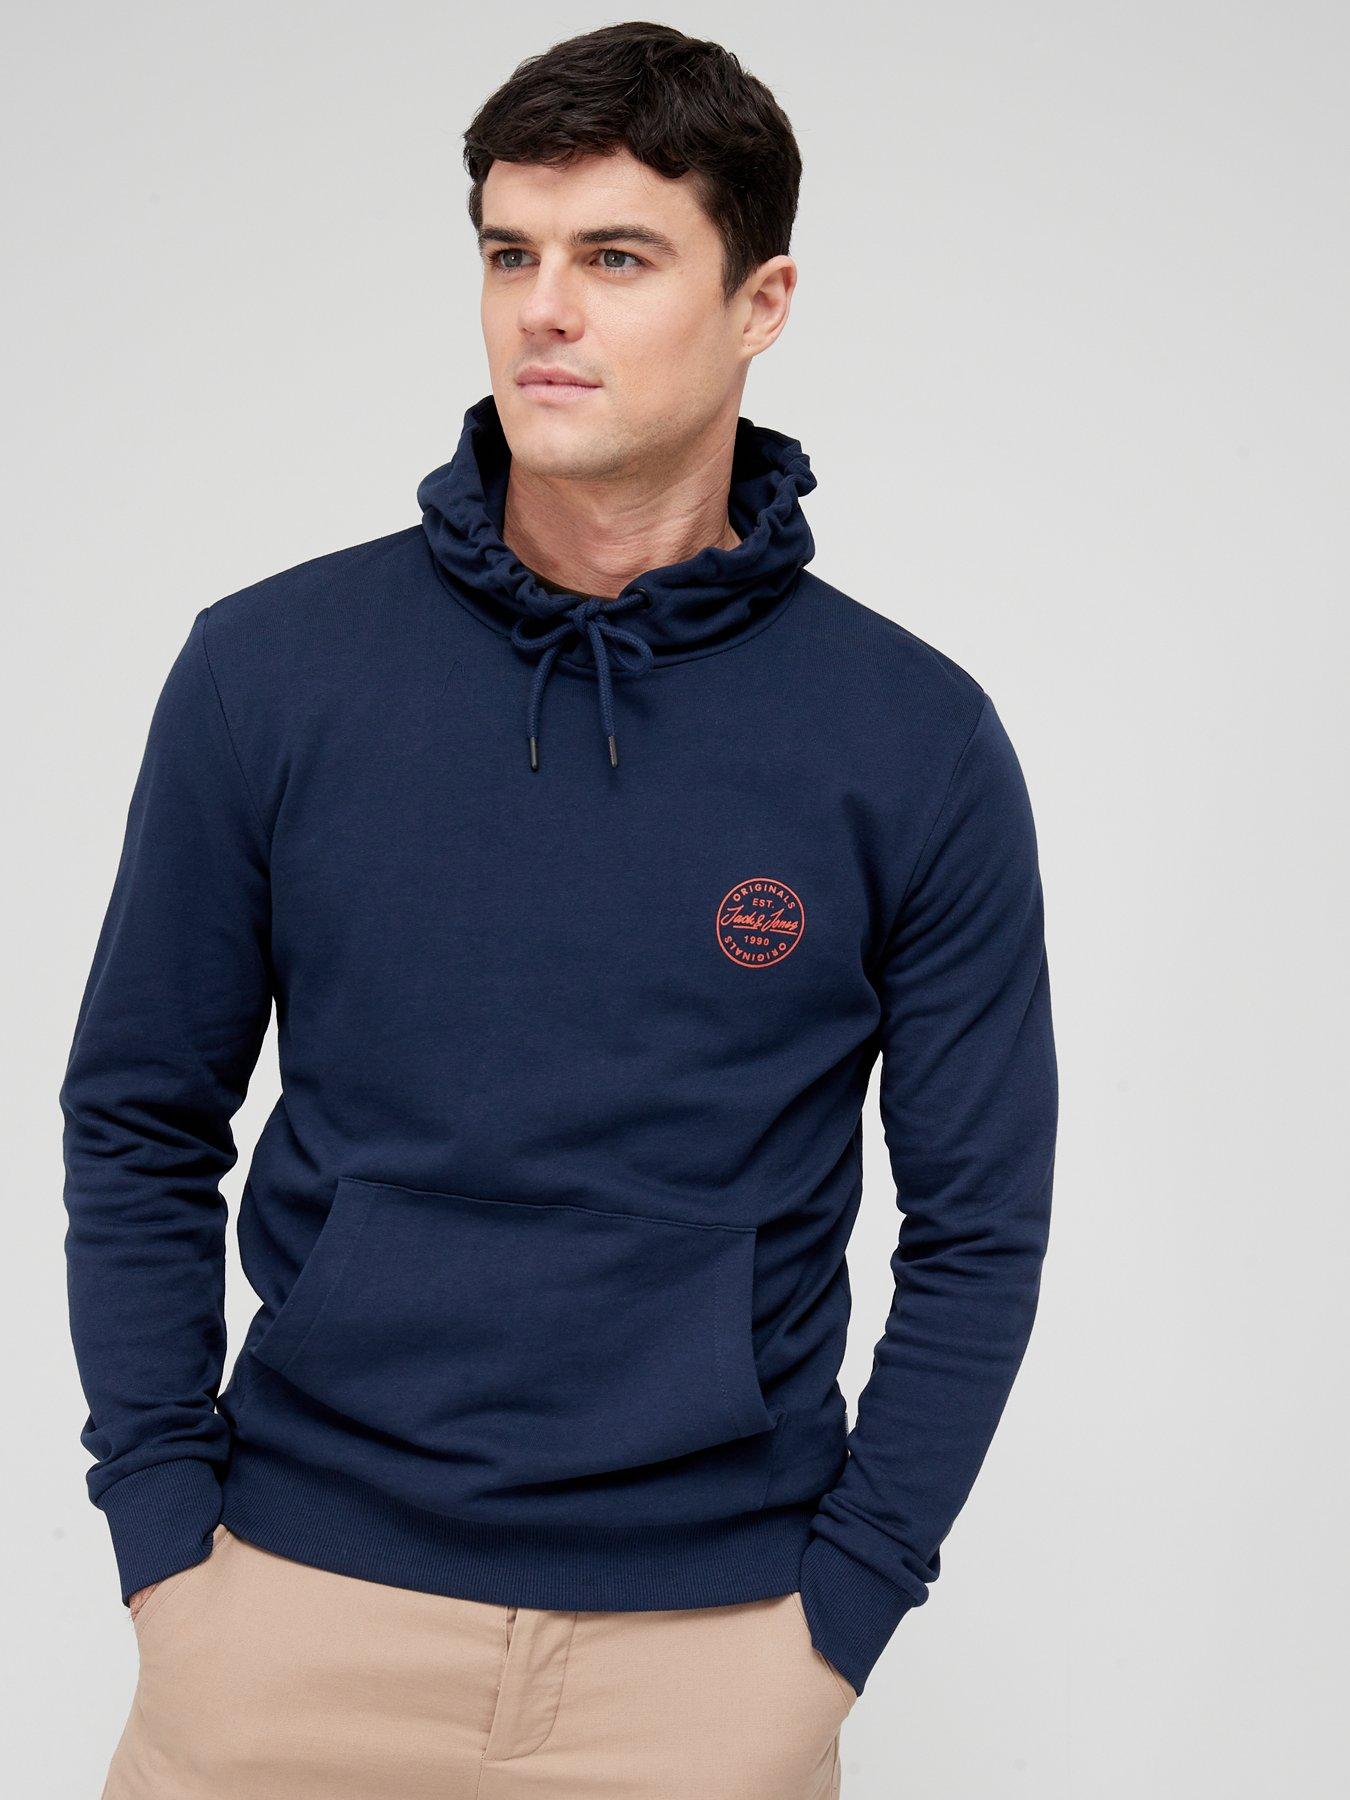 discount 85% KIDS FASHION Jumpers & Sweatshirts Hoodie Zara sweatshirt Navy Blue 